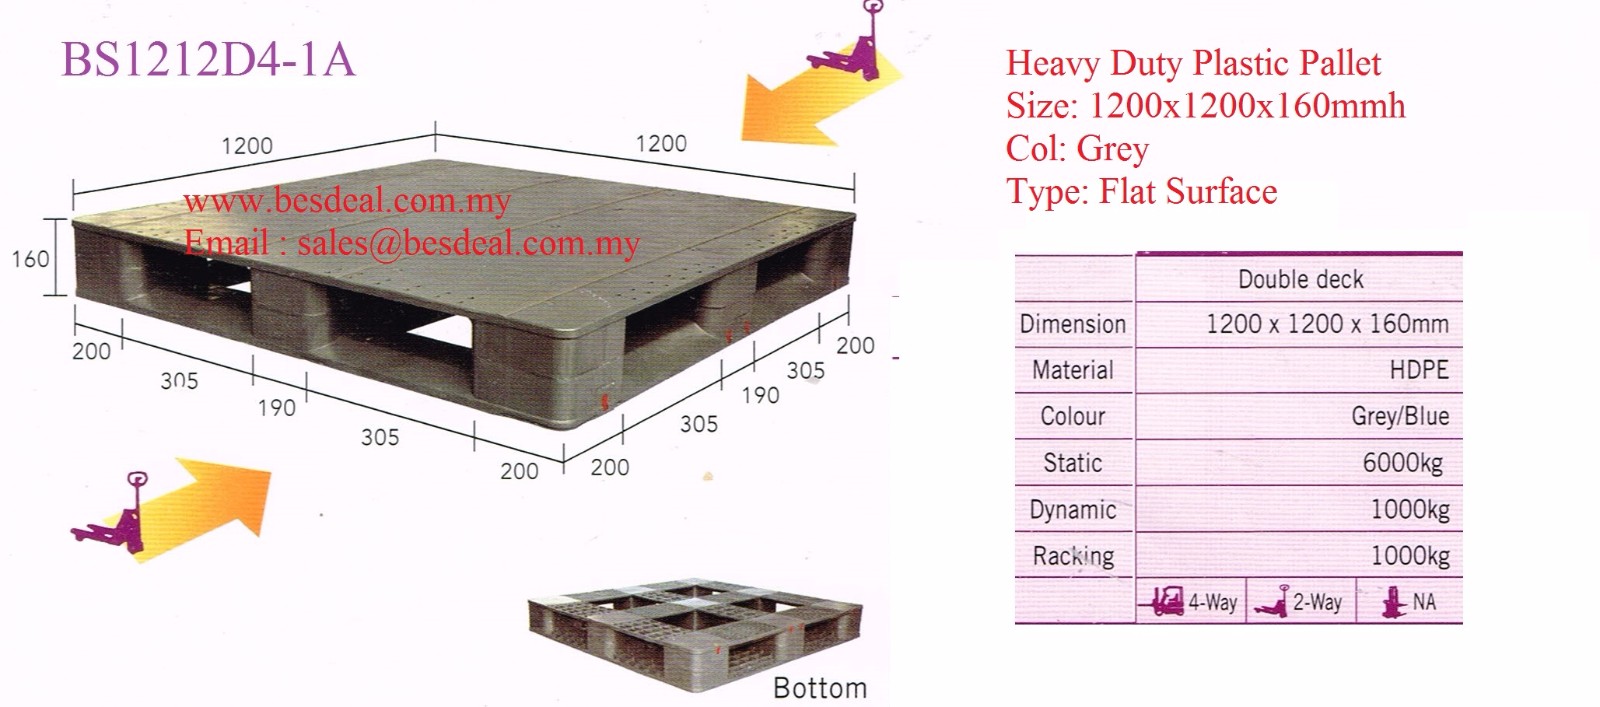 Heavy Duty Plastic Pallet Size 1200*1200*160mmH